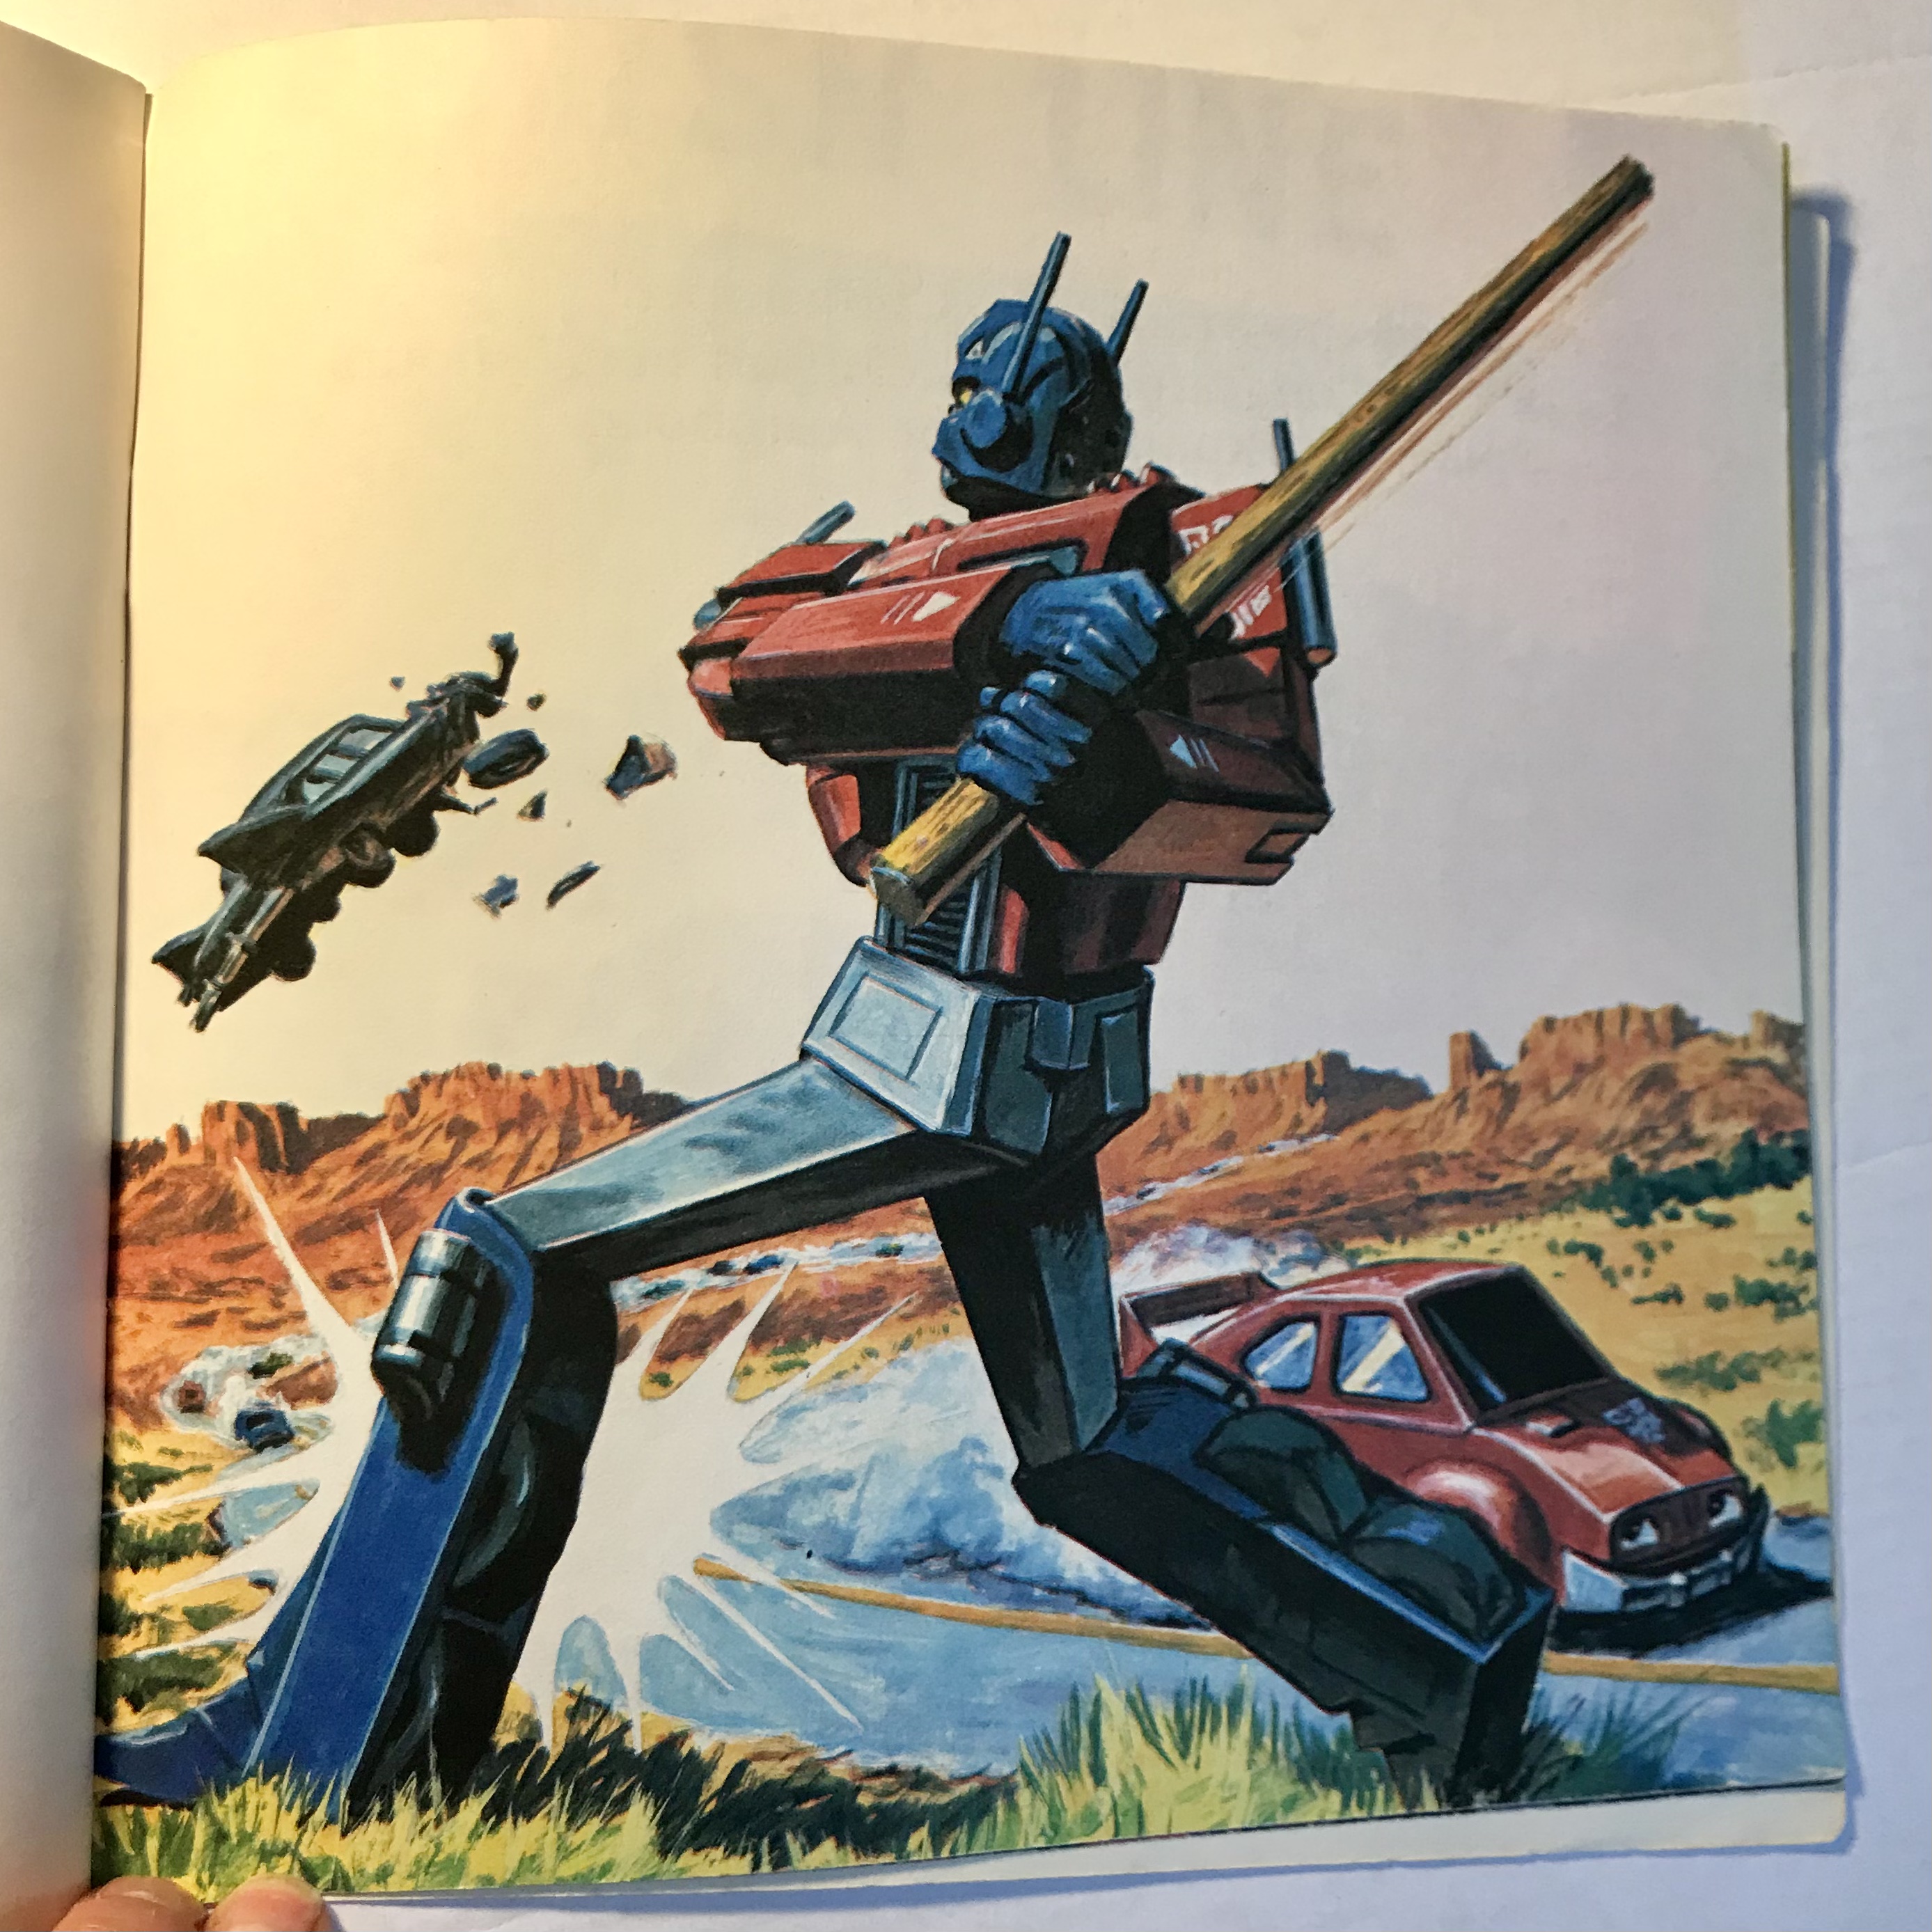 Optimus Prime hits Megatron with a telegraph pole